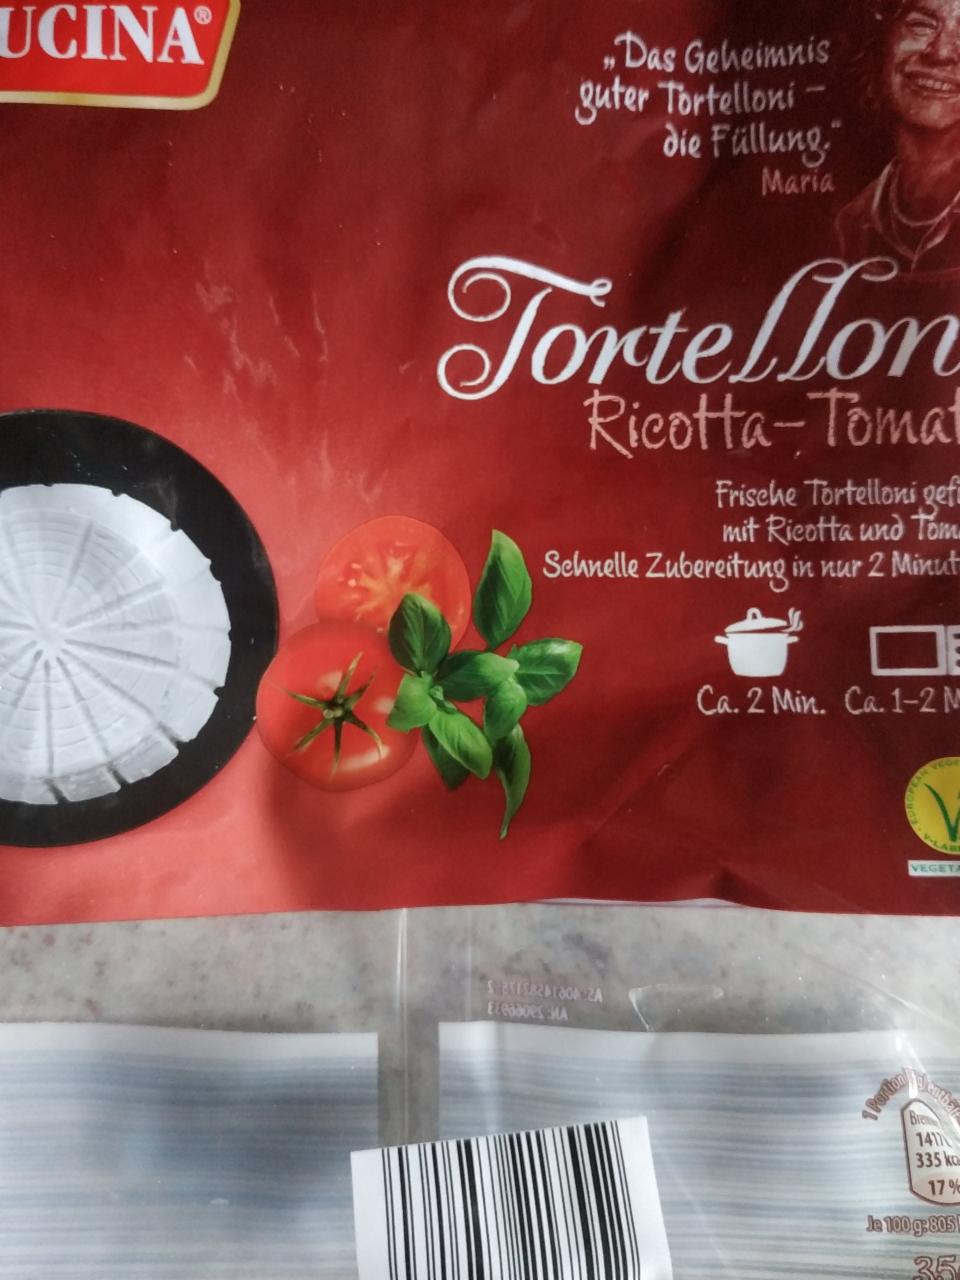 Fotografie - Tortelloni Ricotta-tomate Cucina